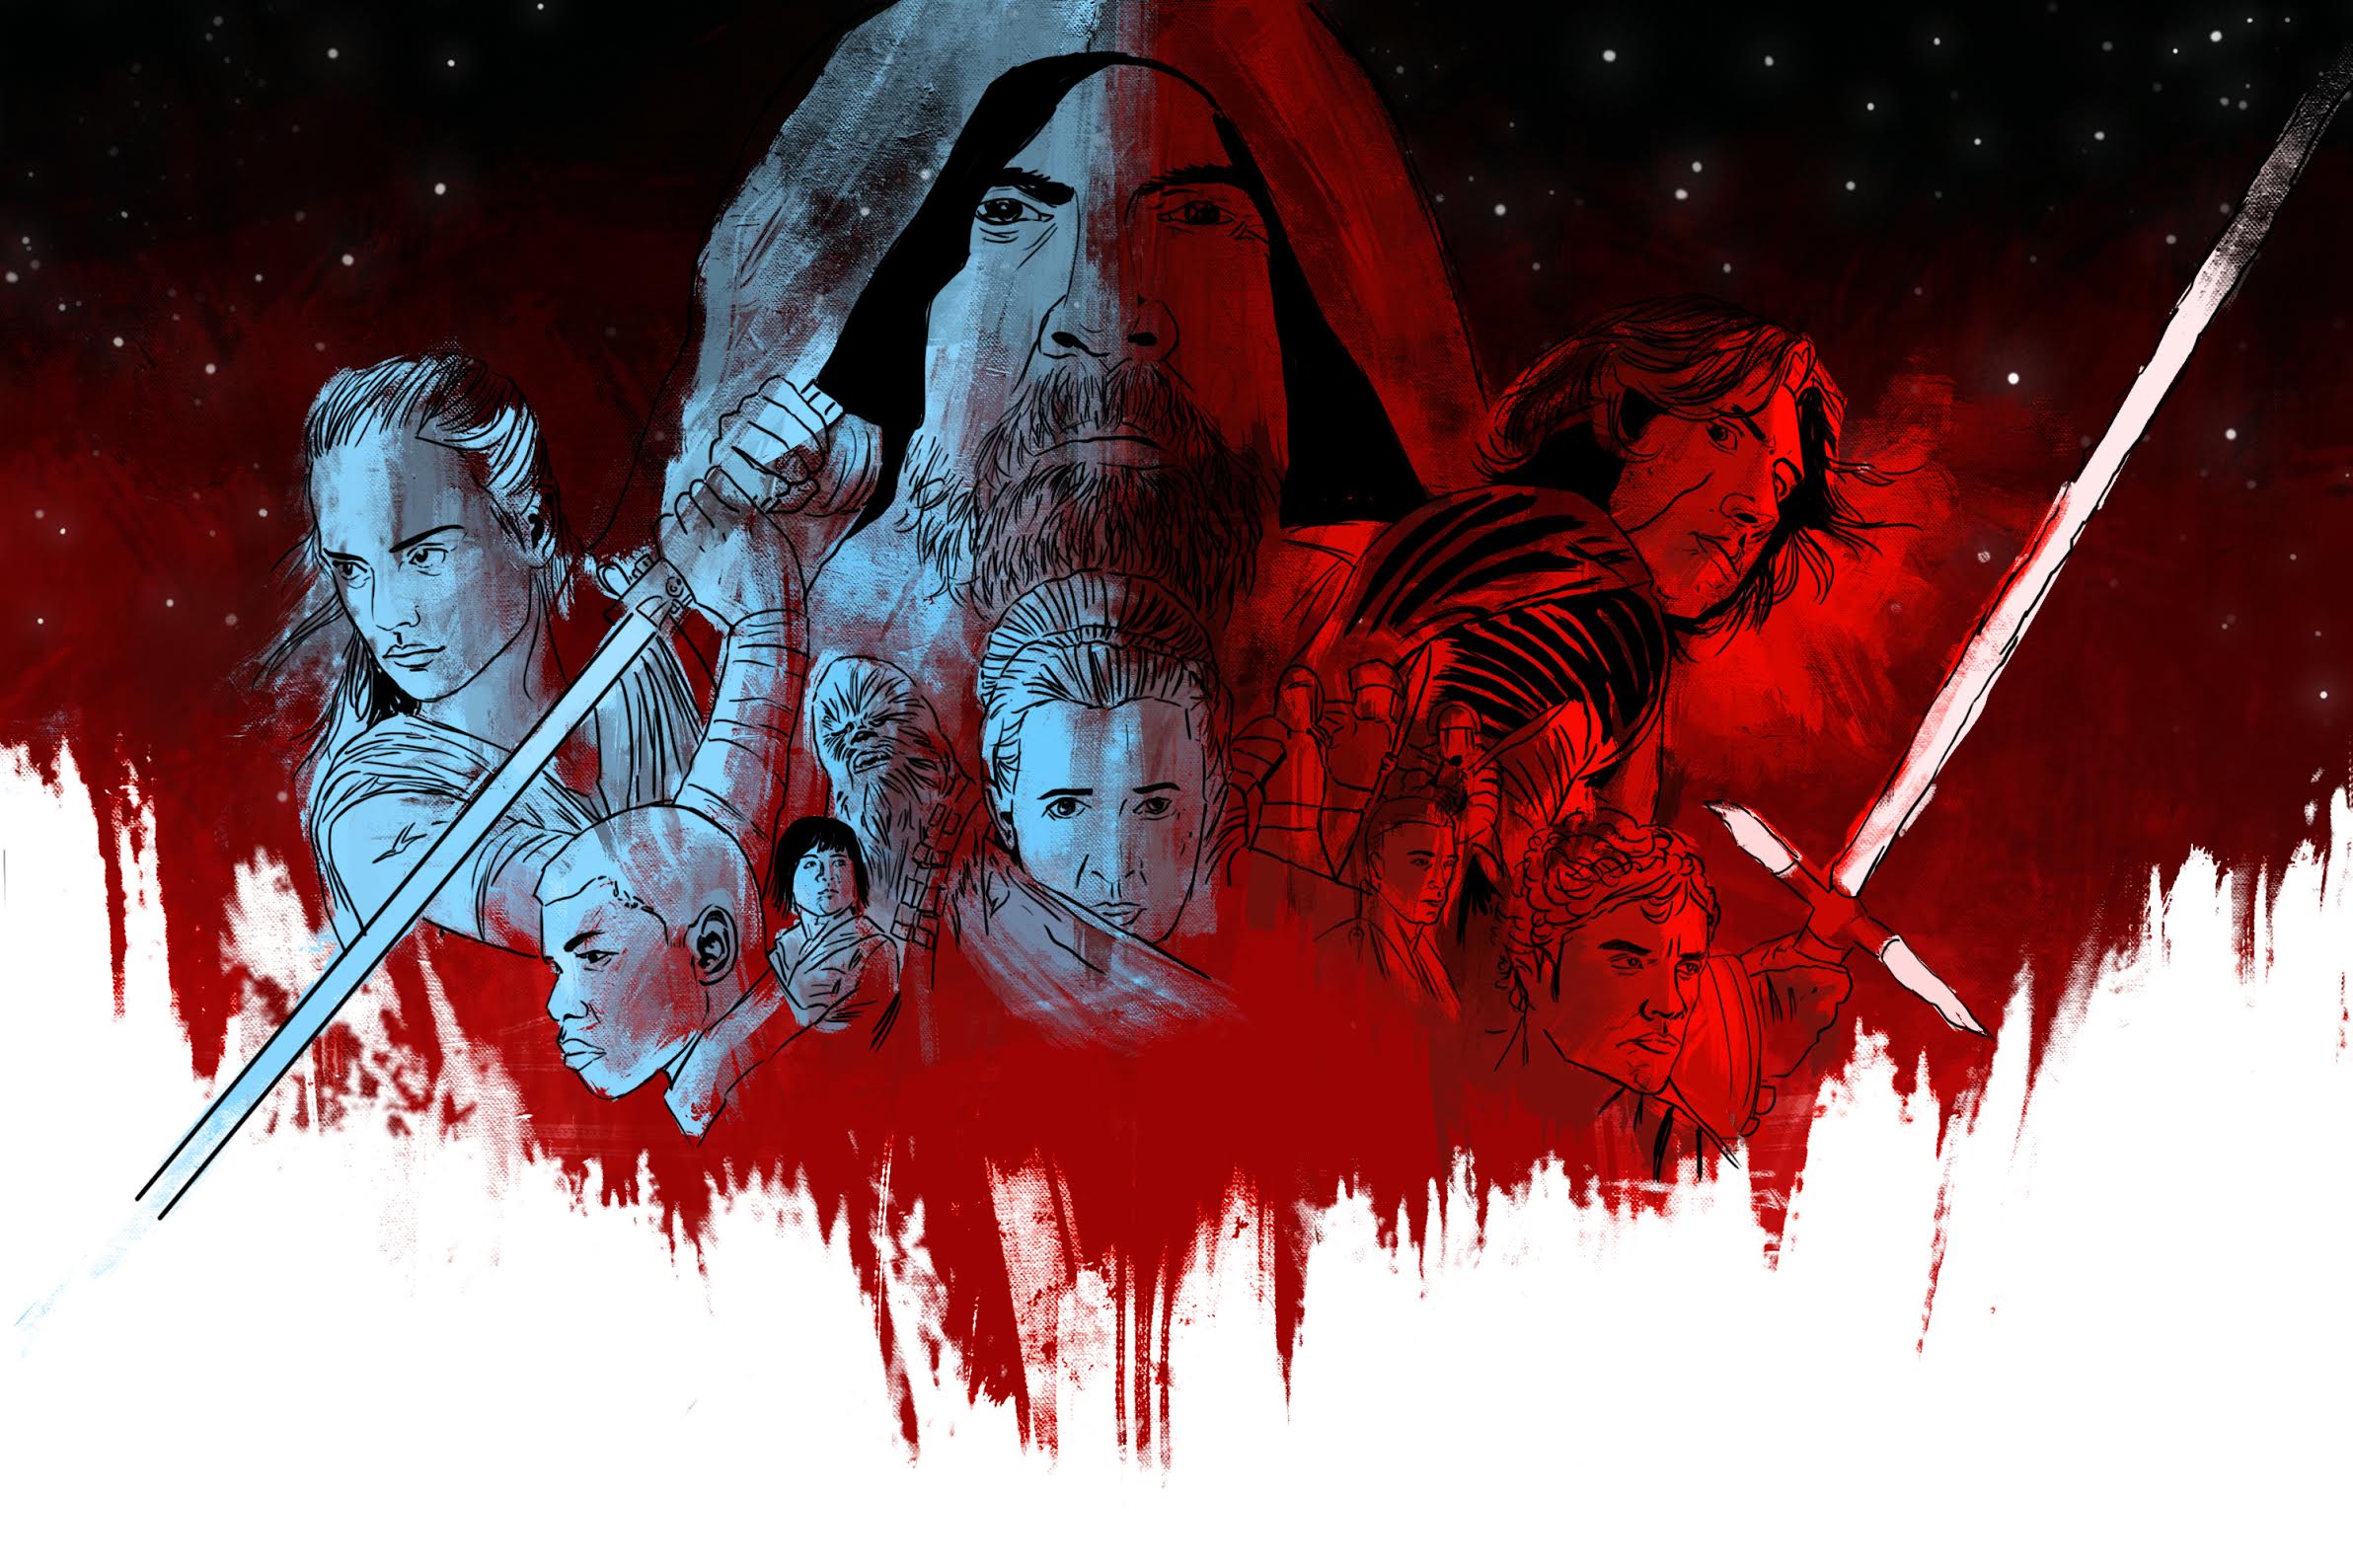 Thumbnail for ‘Star Wars: The Last Jedi’ fails to excite despite excellent presentation